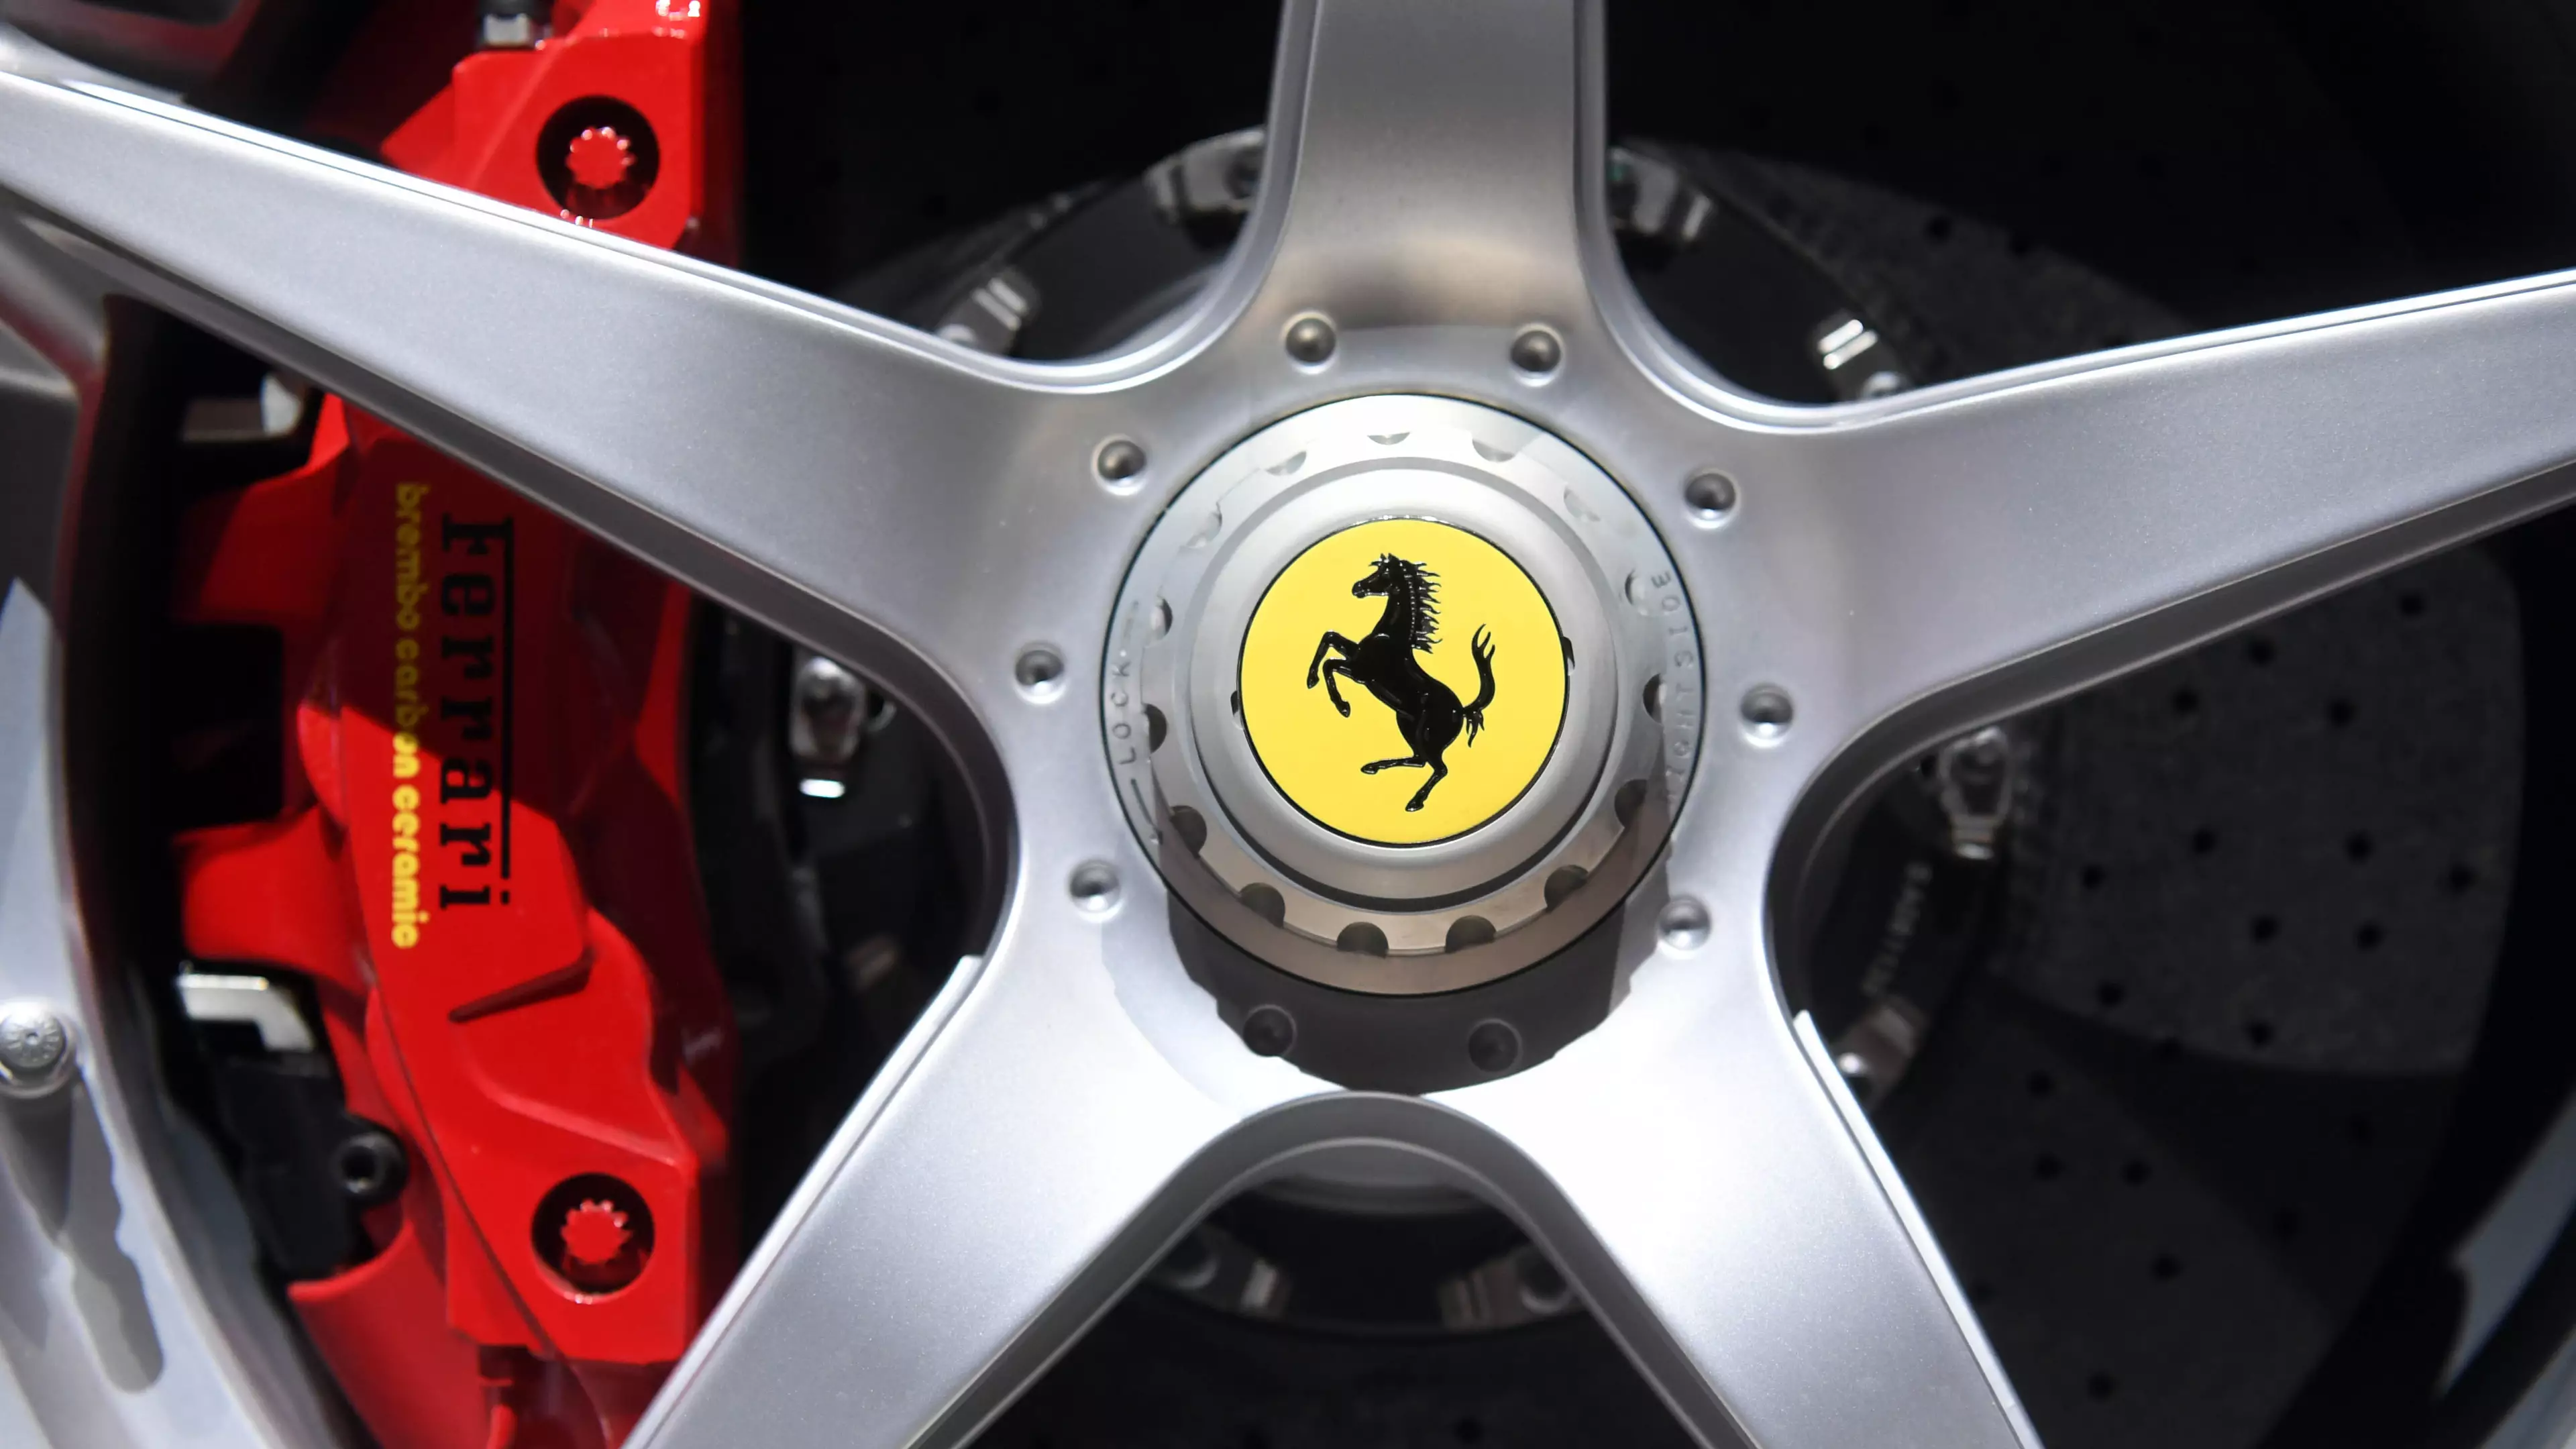 Brazilian Car Fan Builds His Own 'Ferrari' Out Of Scrap Metal